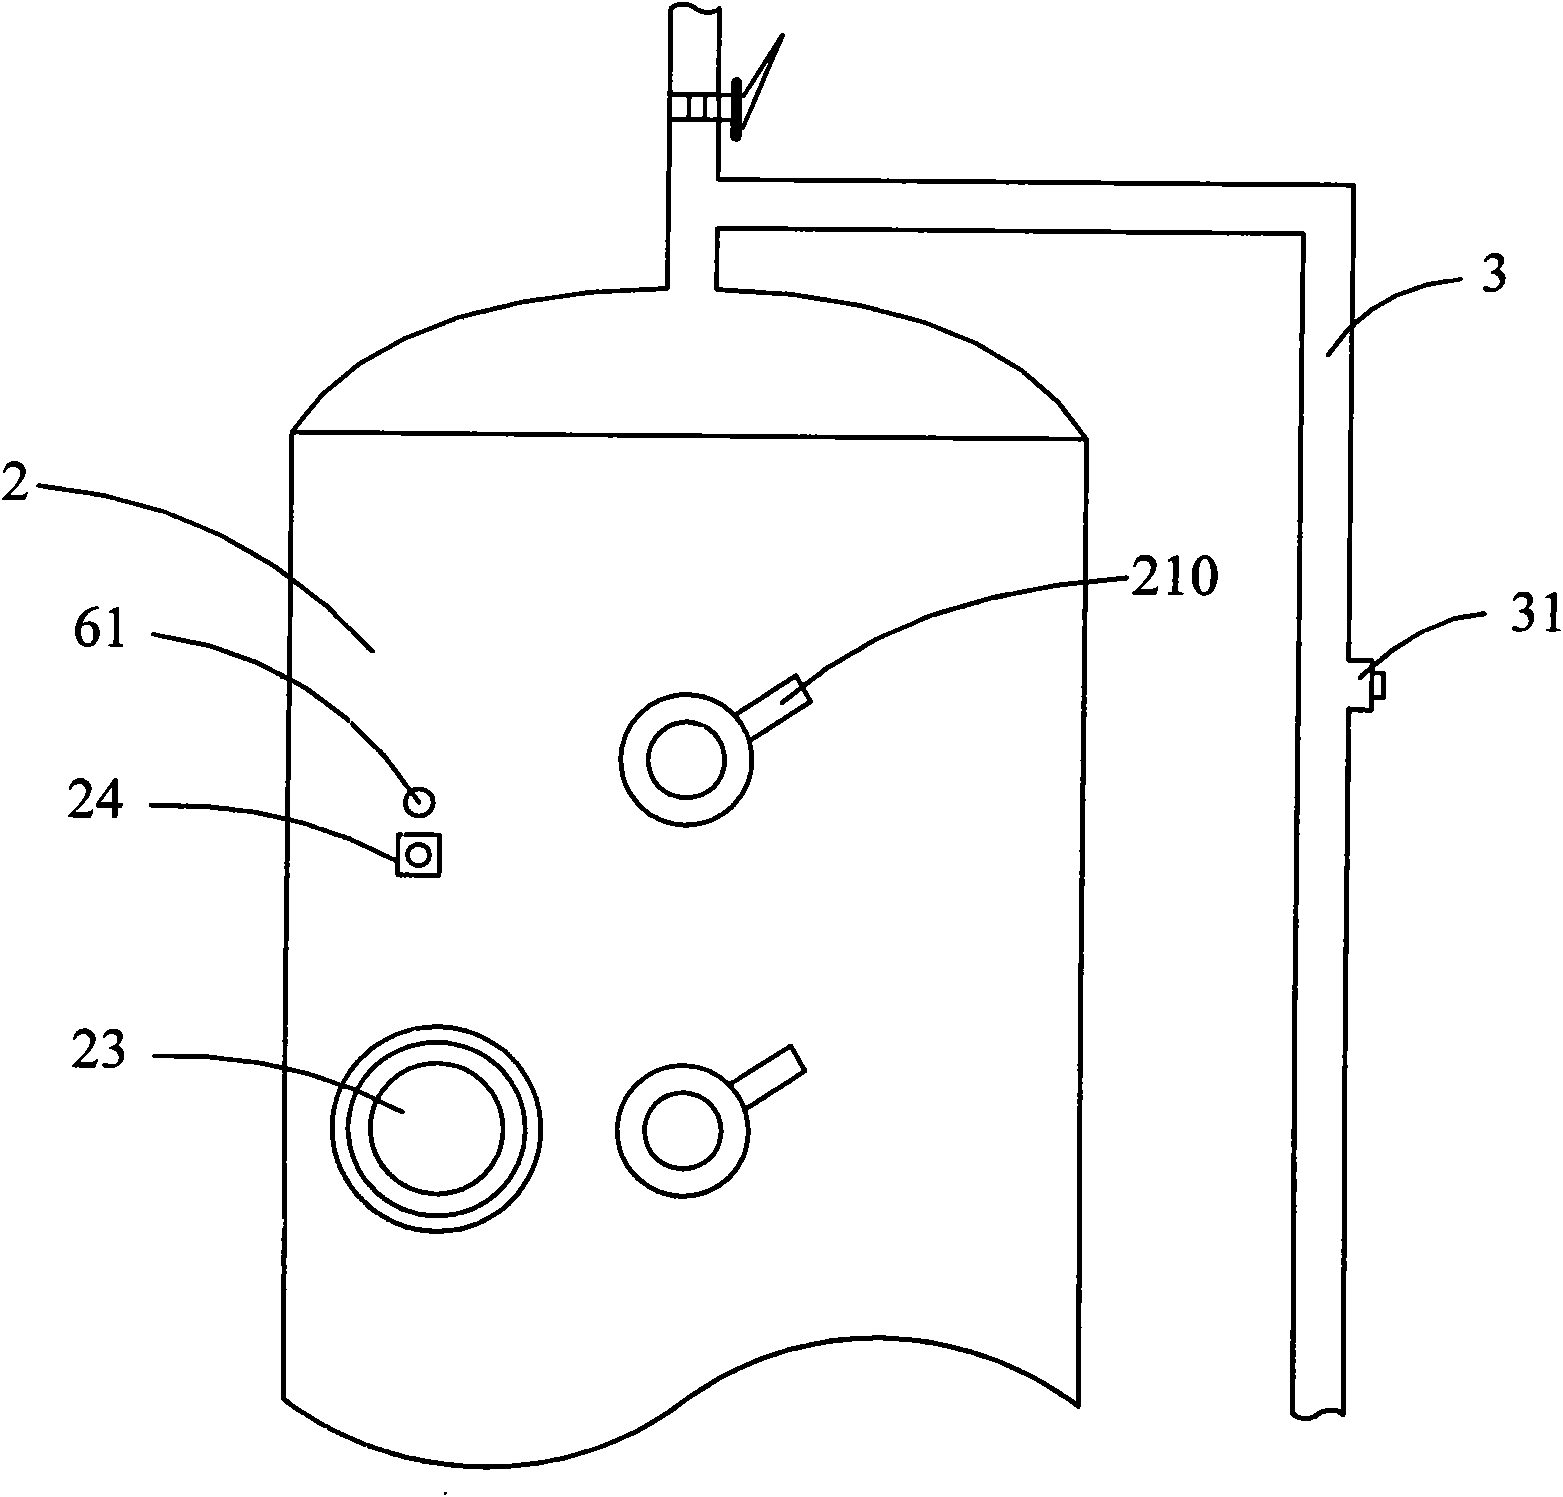 Chromatographic instrument calibration device